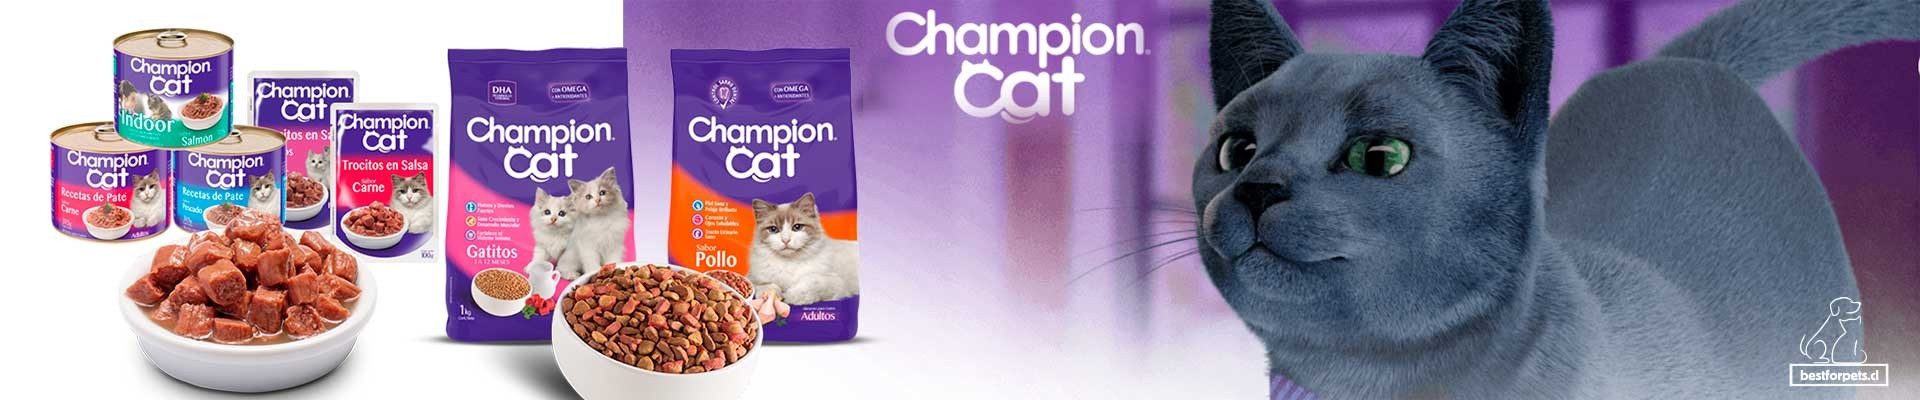 Alimentos Champion Cat para gatos